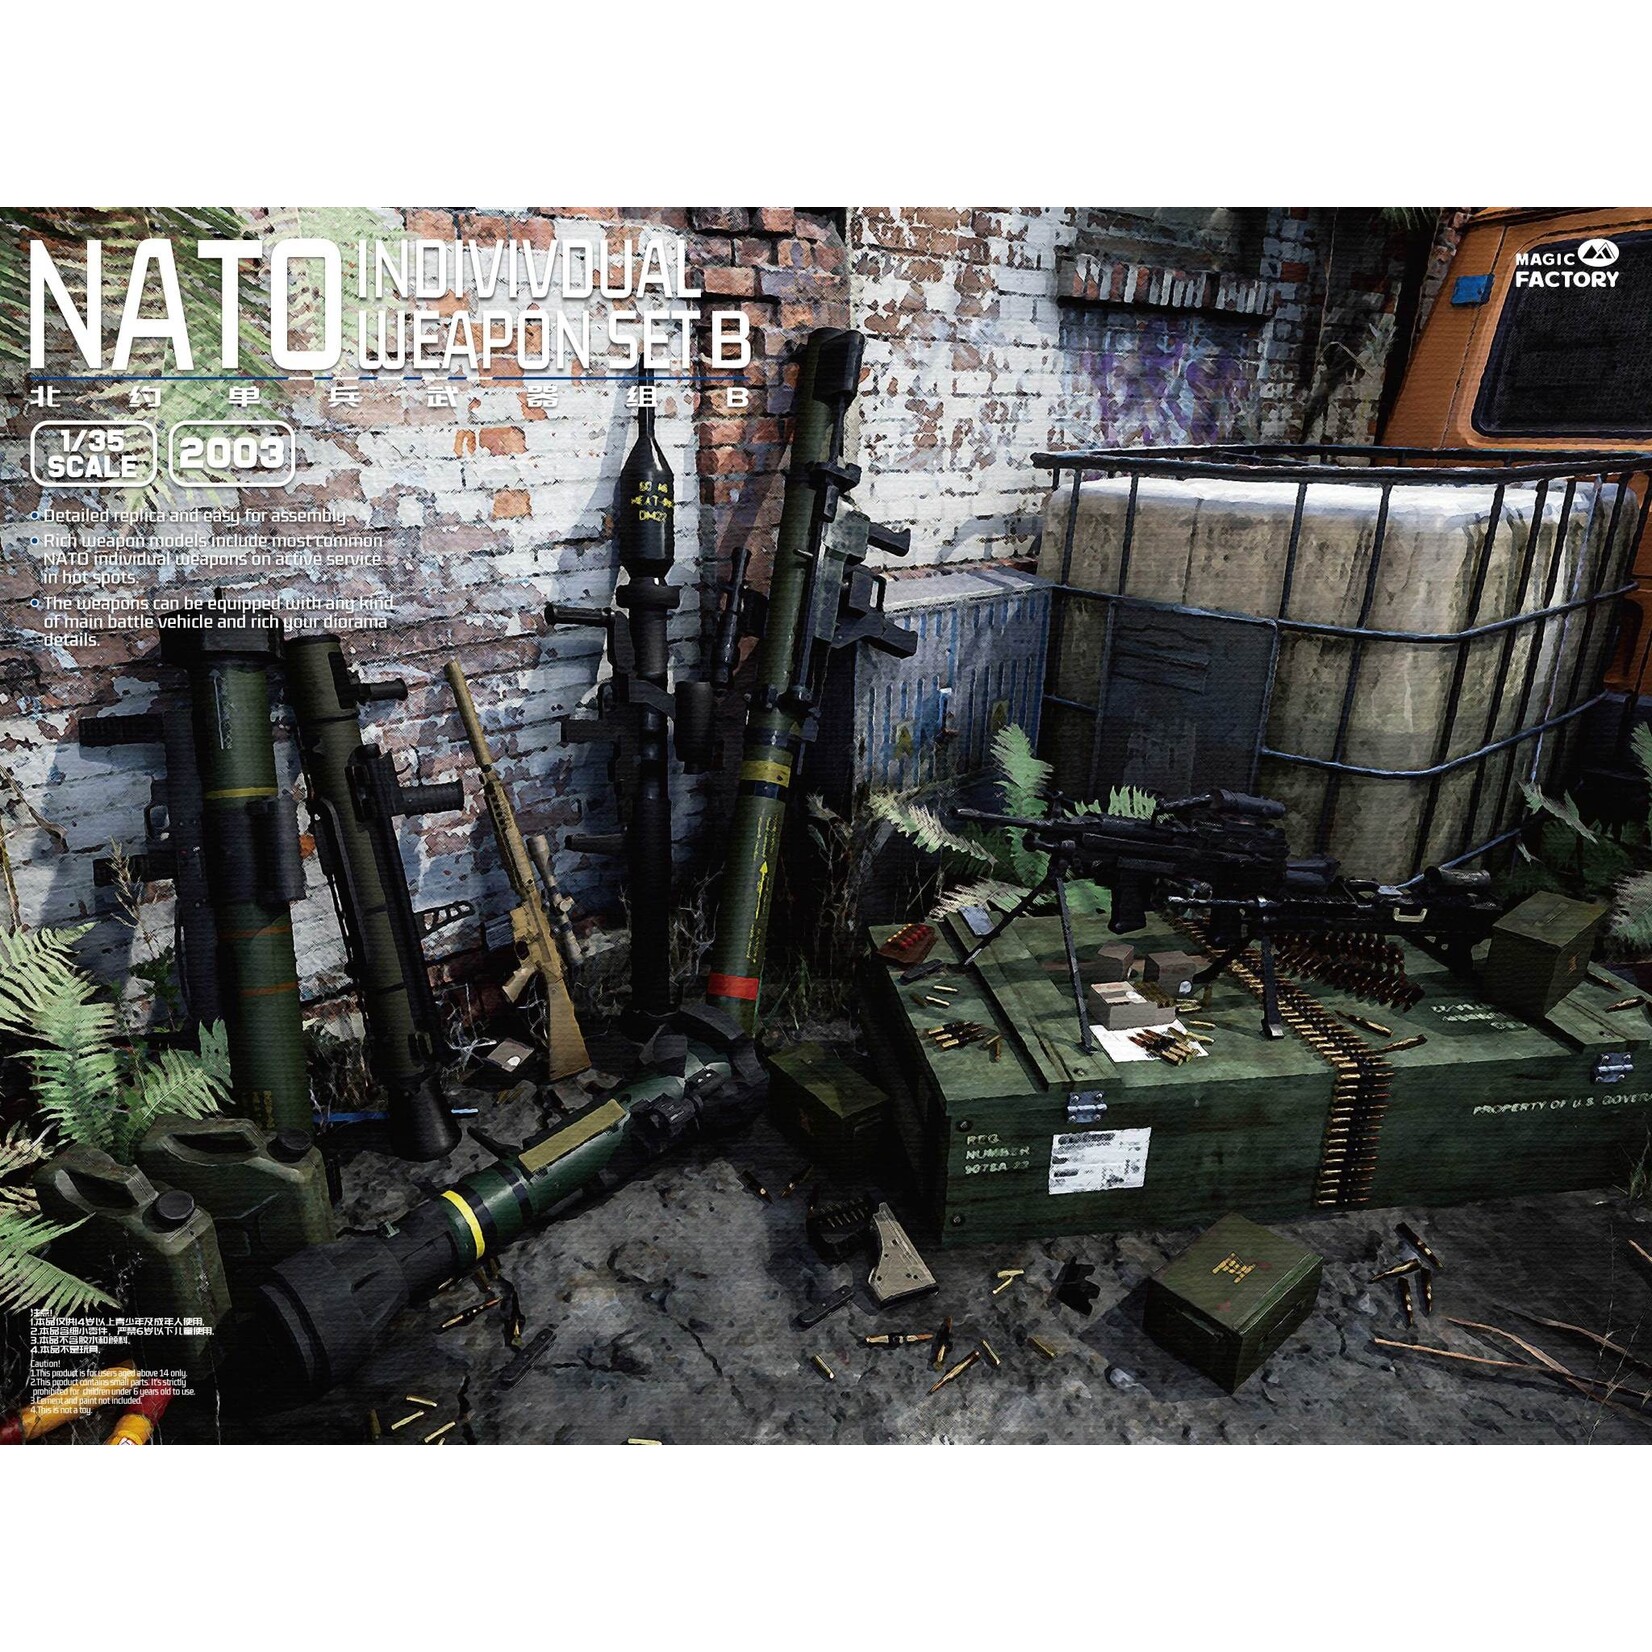 Magic Factory MFY2003 NATO Individual Weapon Set B (1/35)